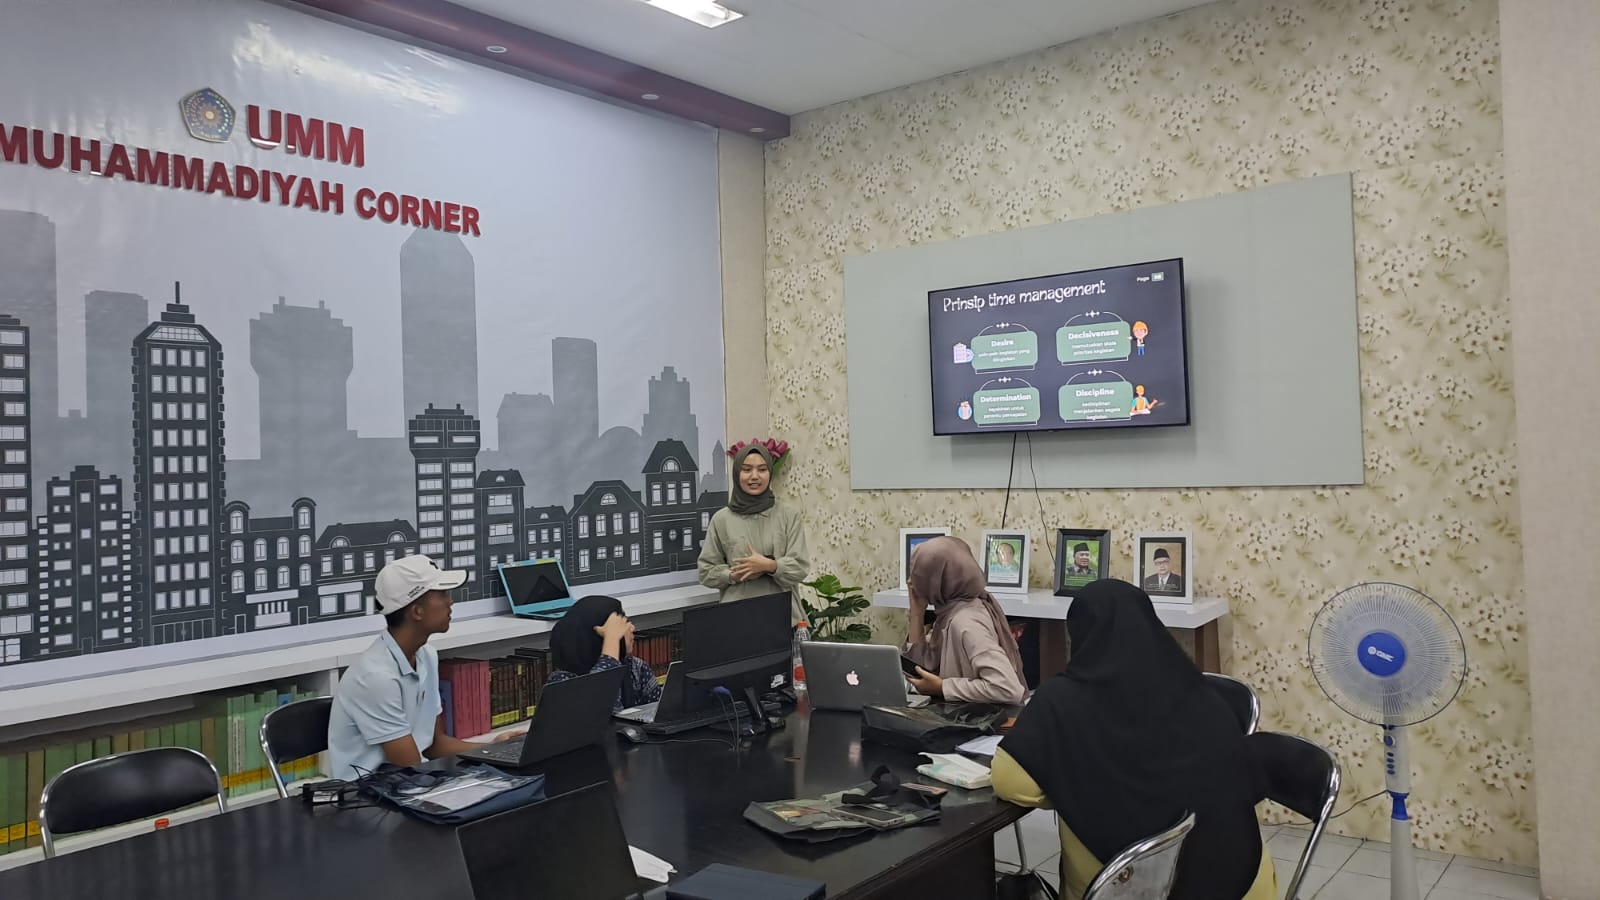 Muhammadiyah dan UMM Corner salah satu tempat yang representatif bagi pemustaka untuk diskusi, presentasi yang di sediakan Perpustakaan.